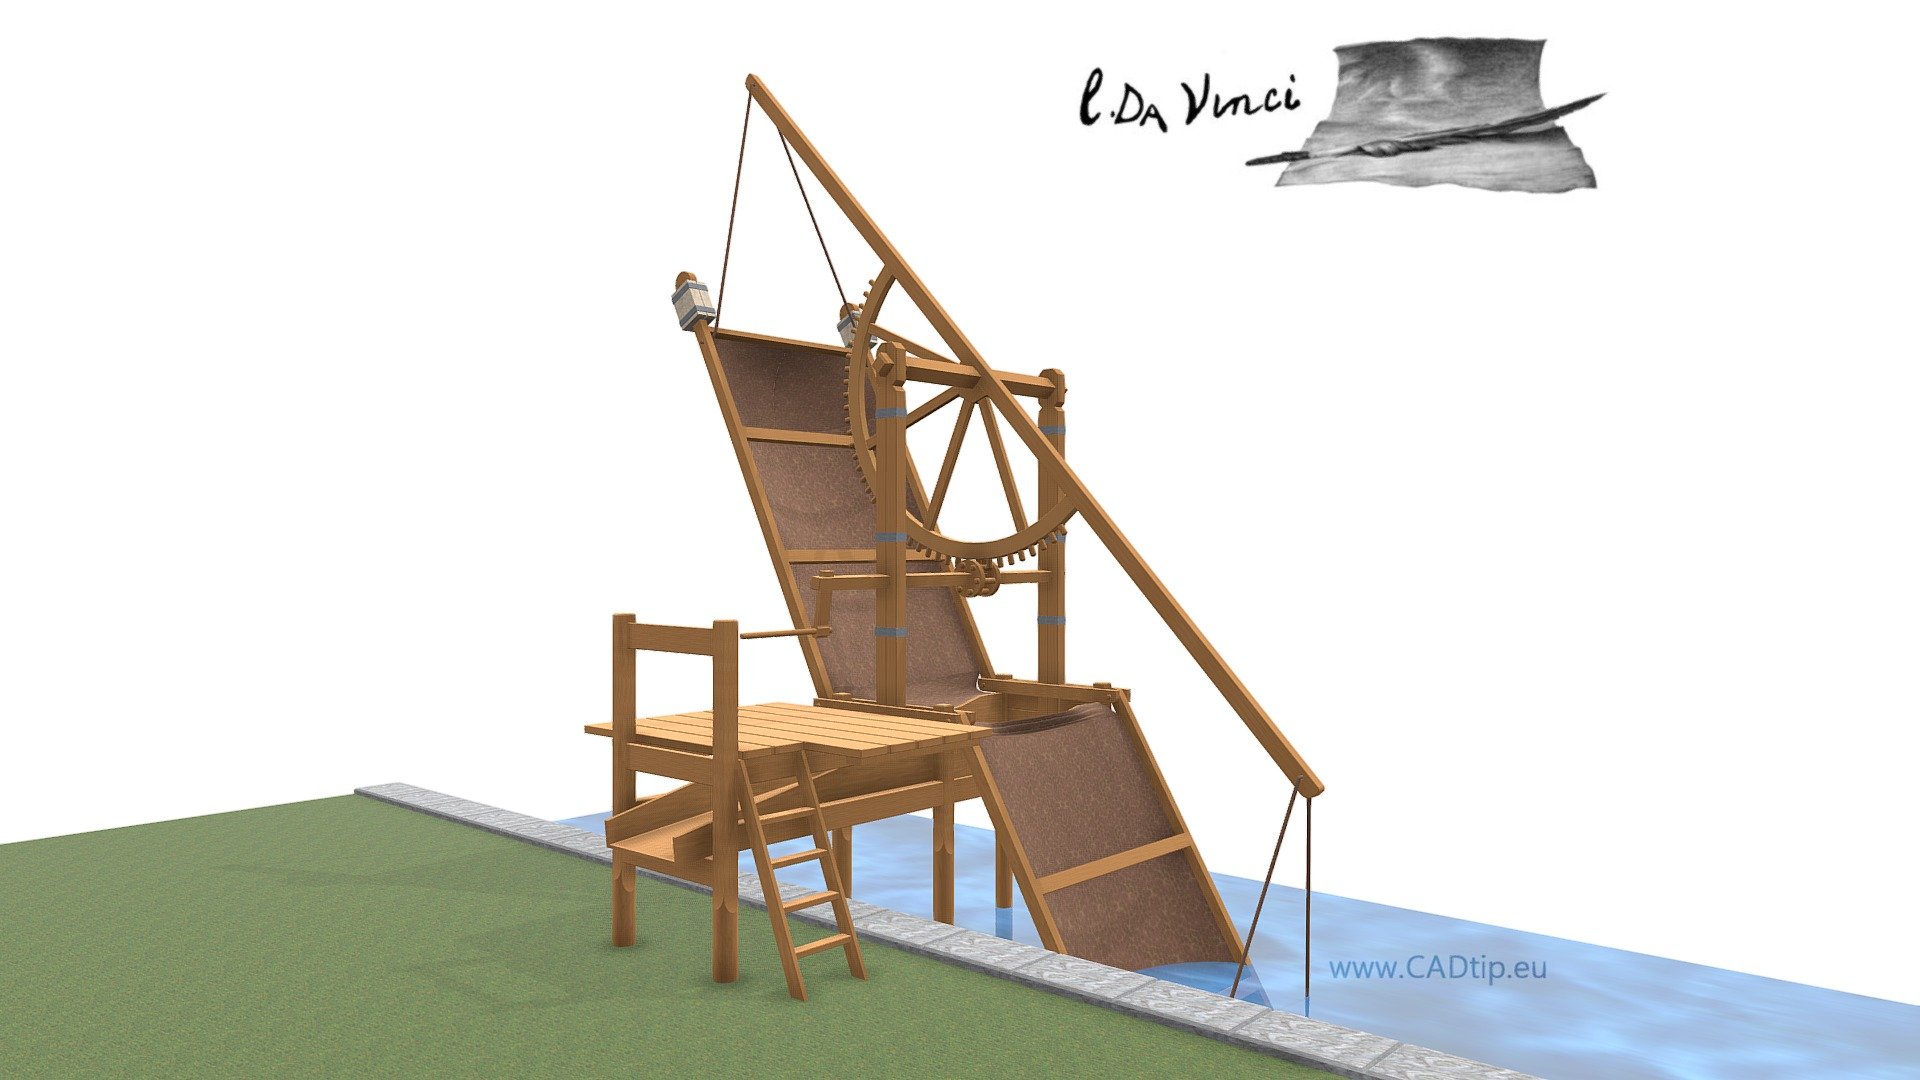 Water pump,Leonardo da Vinci, Codex Forster I/0045v 

More: http://leonardo.cadtip.eu/2017/12/25/cerpadlo-3/ - Water pump - 3D model by Mar.K 3d model